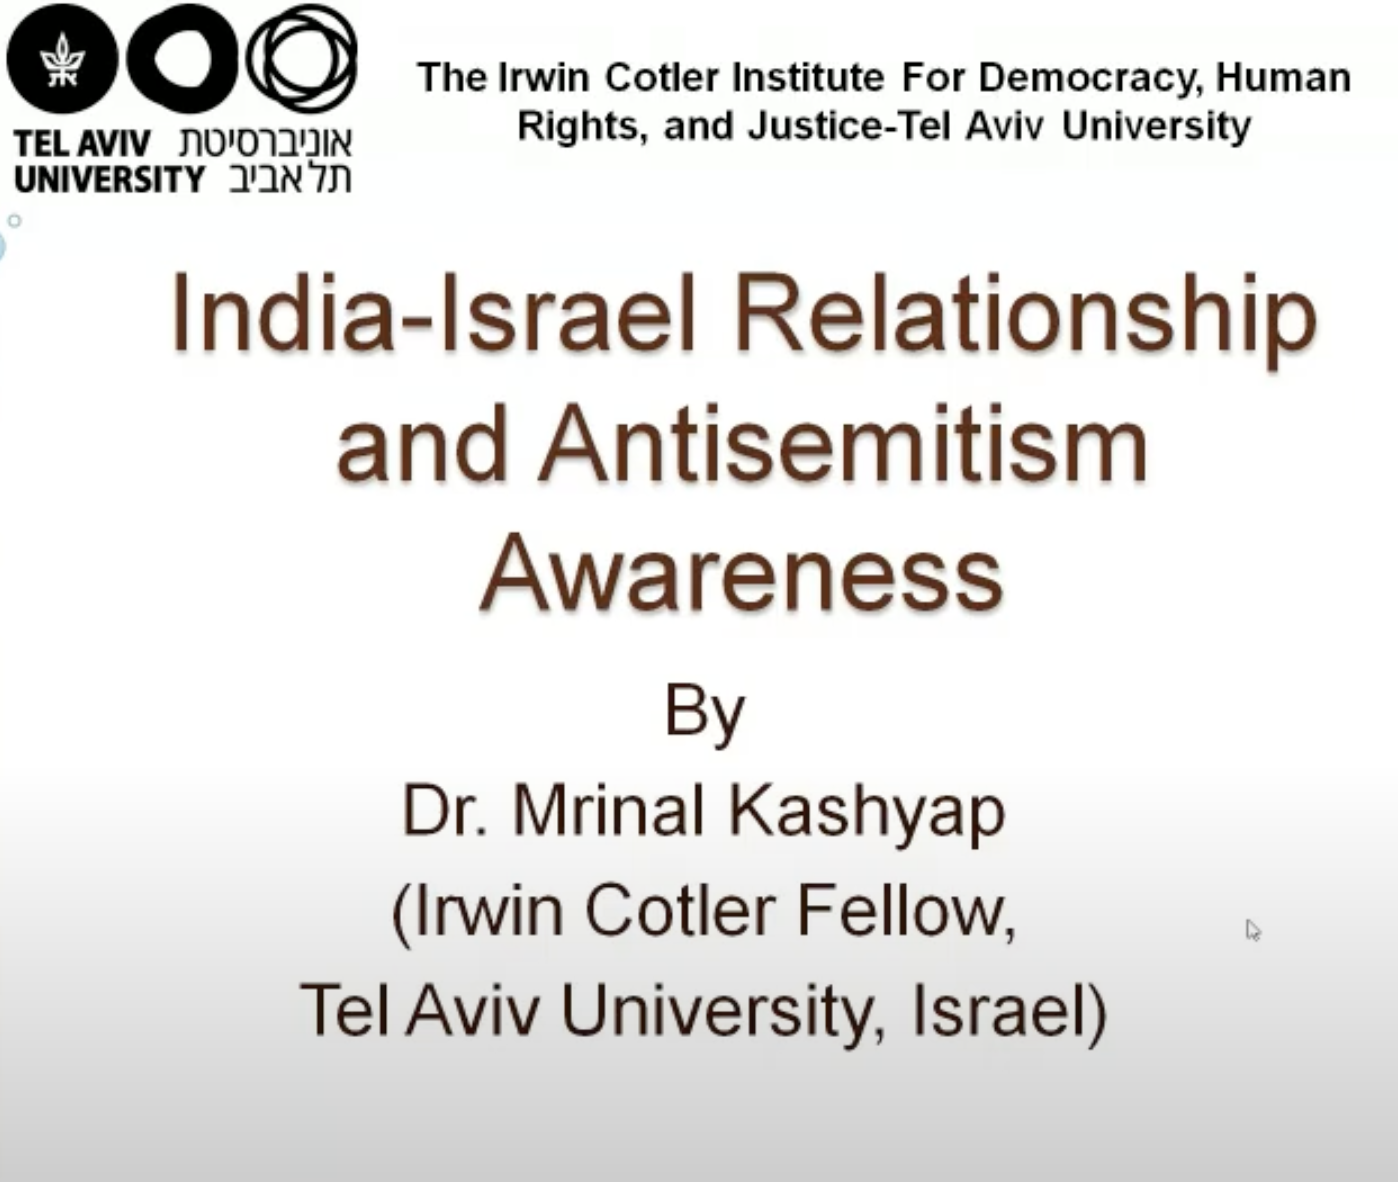 Israel-India Relations and Antisemitism Awareness